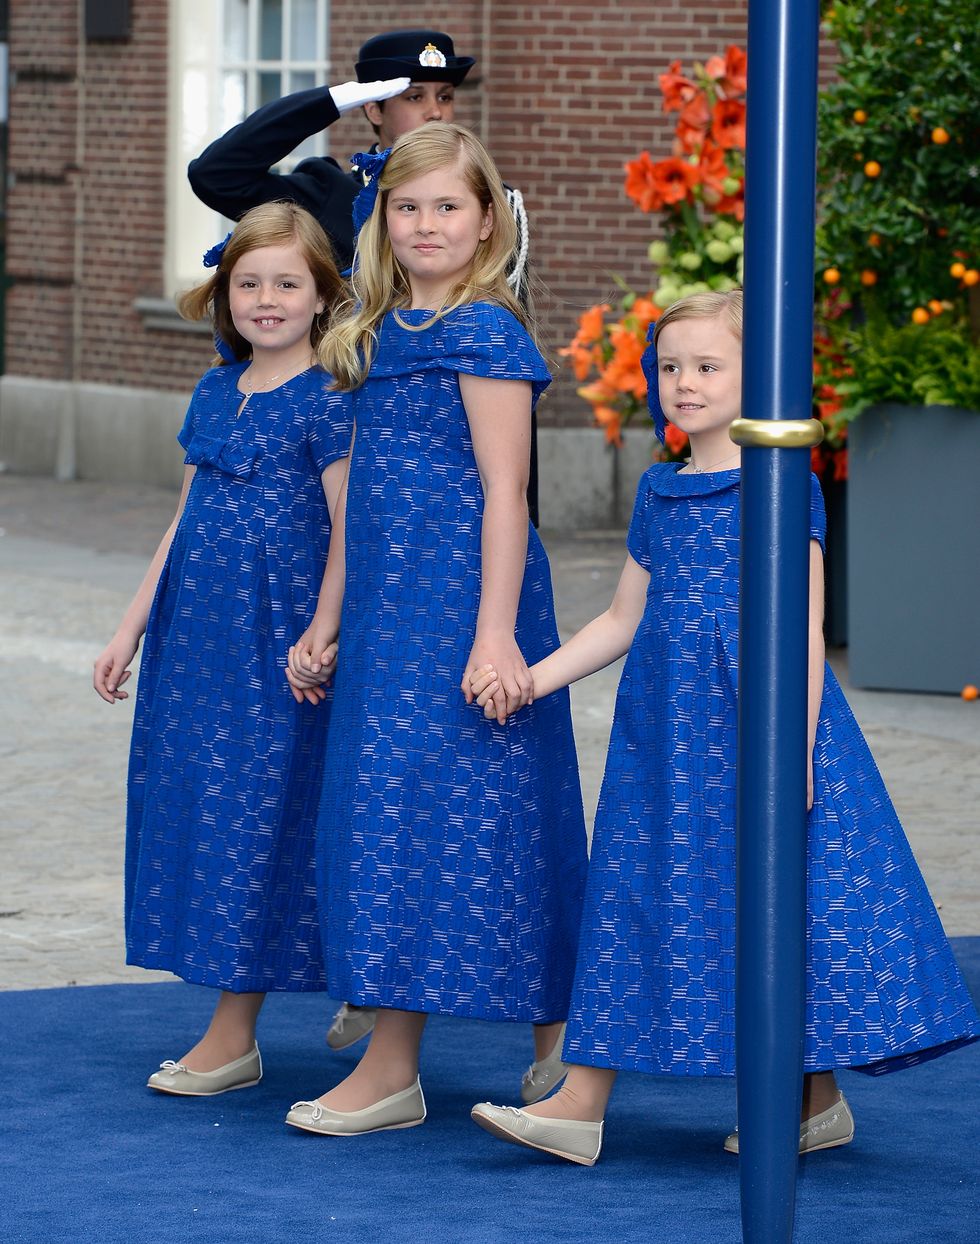 prinses amalia, prinses alexia en prinses ariane tijdens de inauguratie van koning willem alexander in 2013